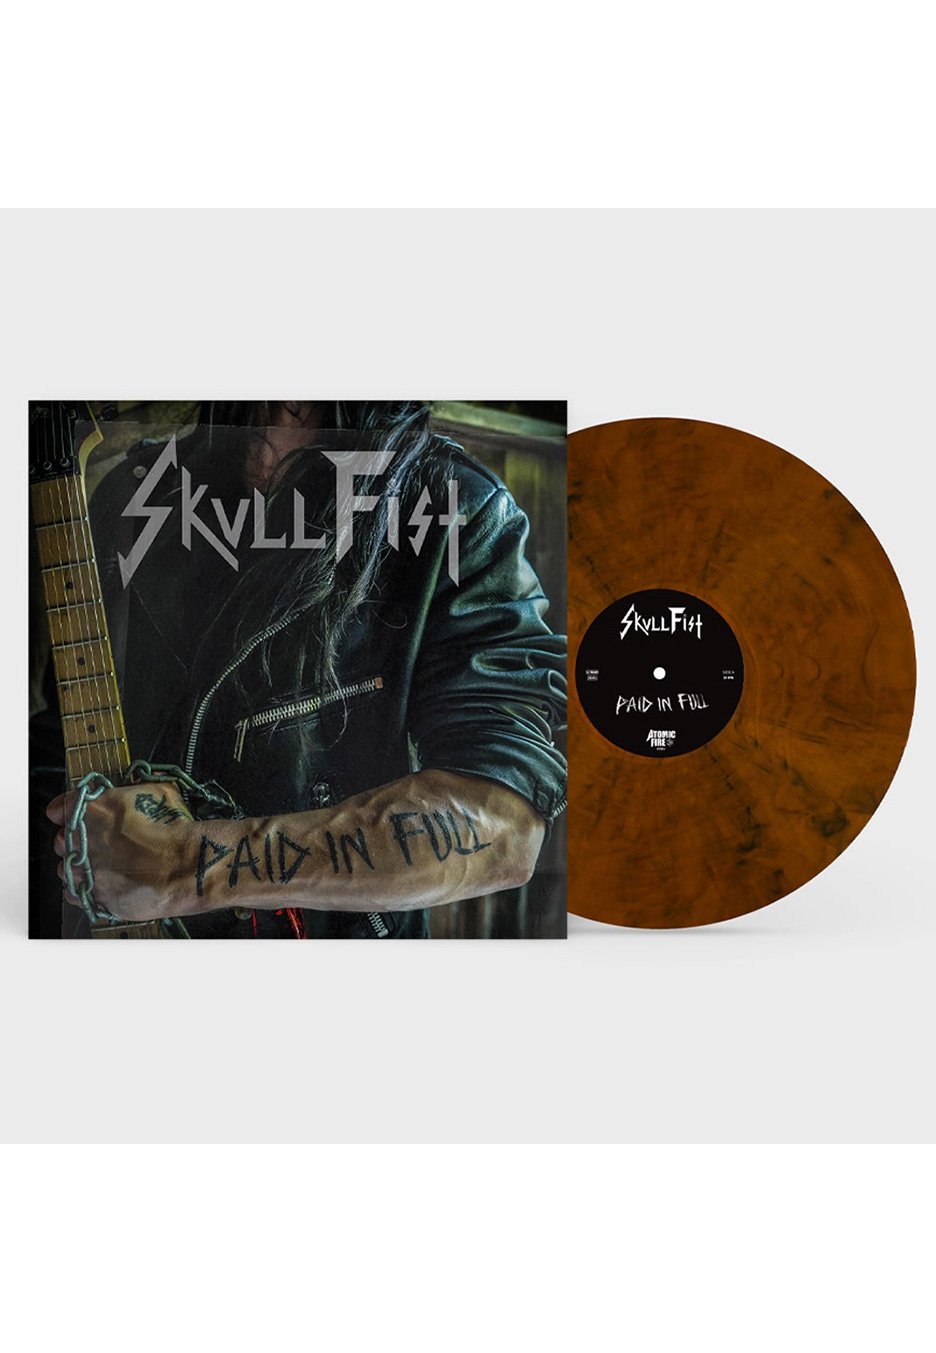 Skull Fist - Paid In Full Orange/Black - Marbled Vinyl